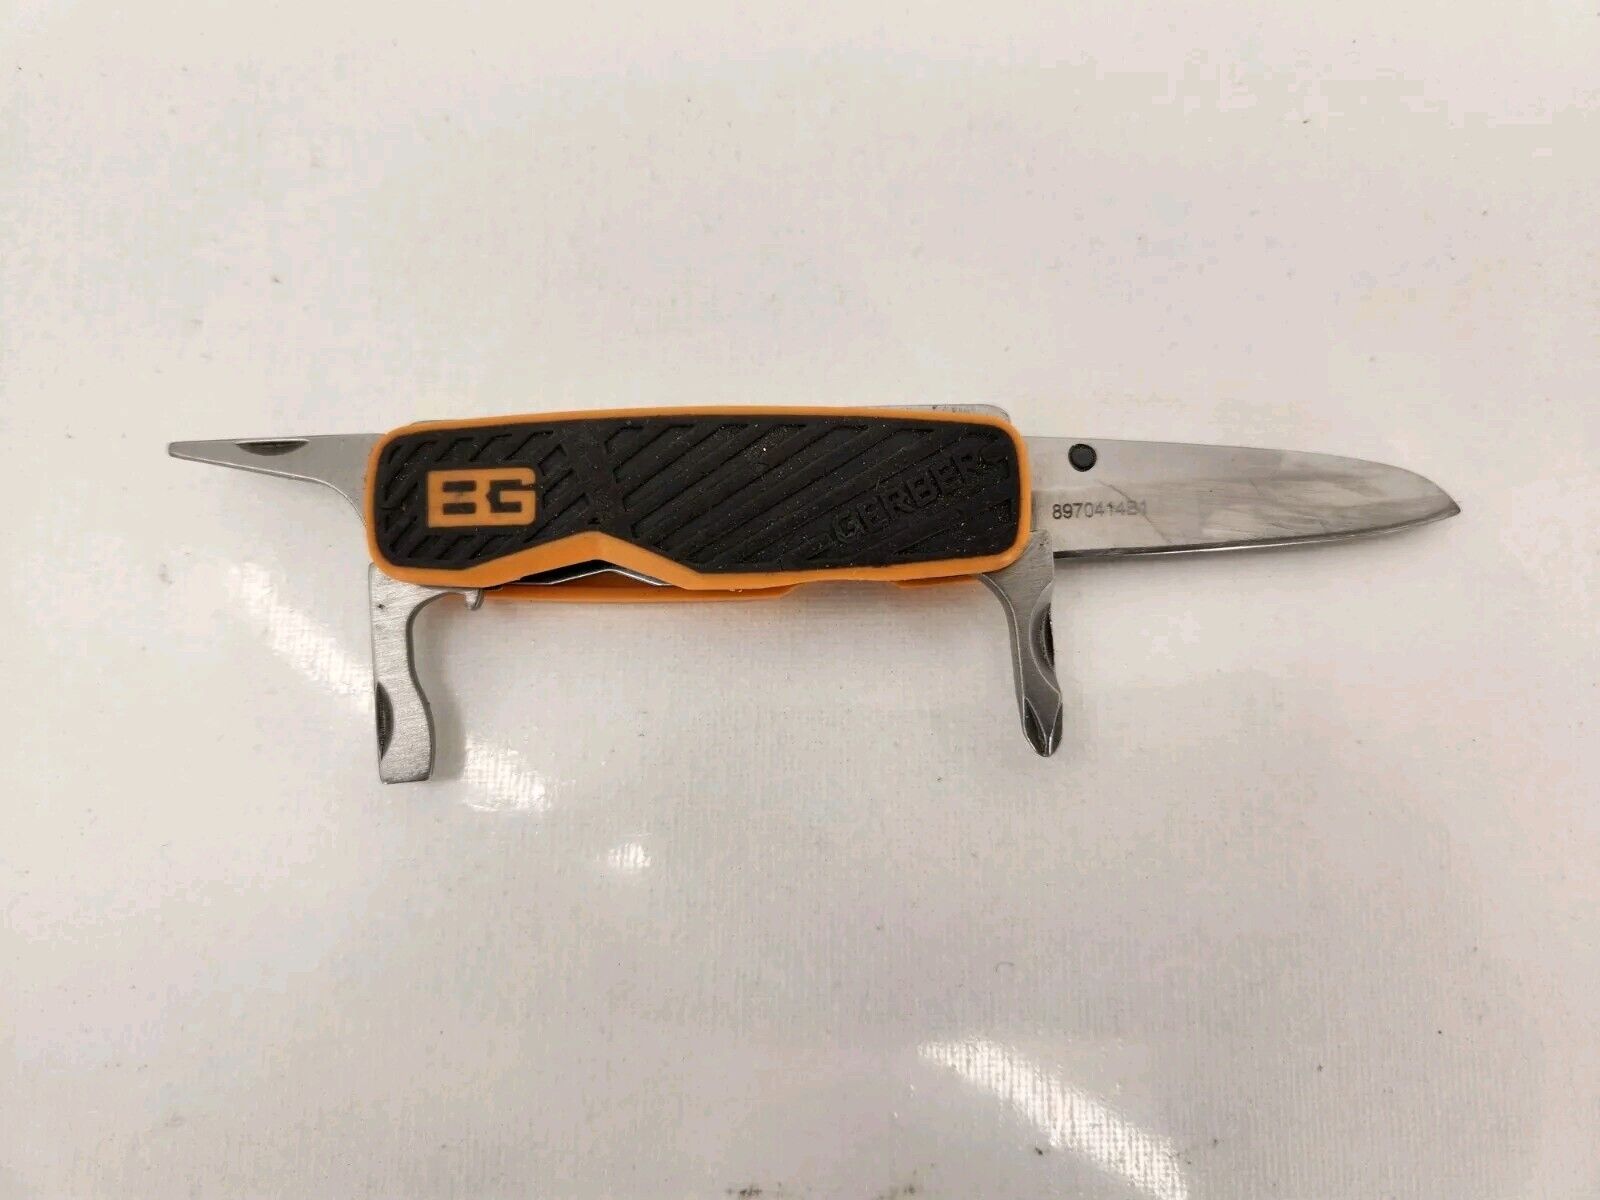 Gerber Bear Grylls BG Pocket Knive Blade Screwdriver Work Tools